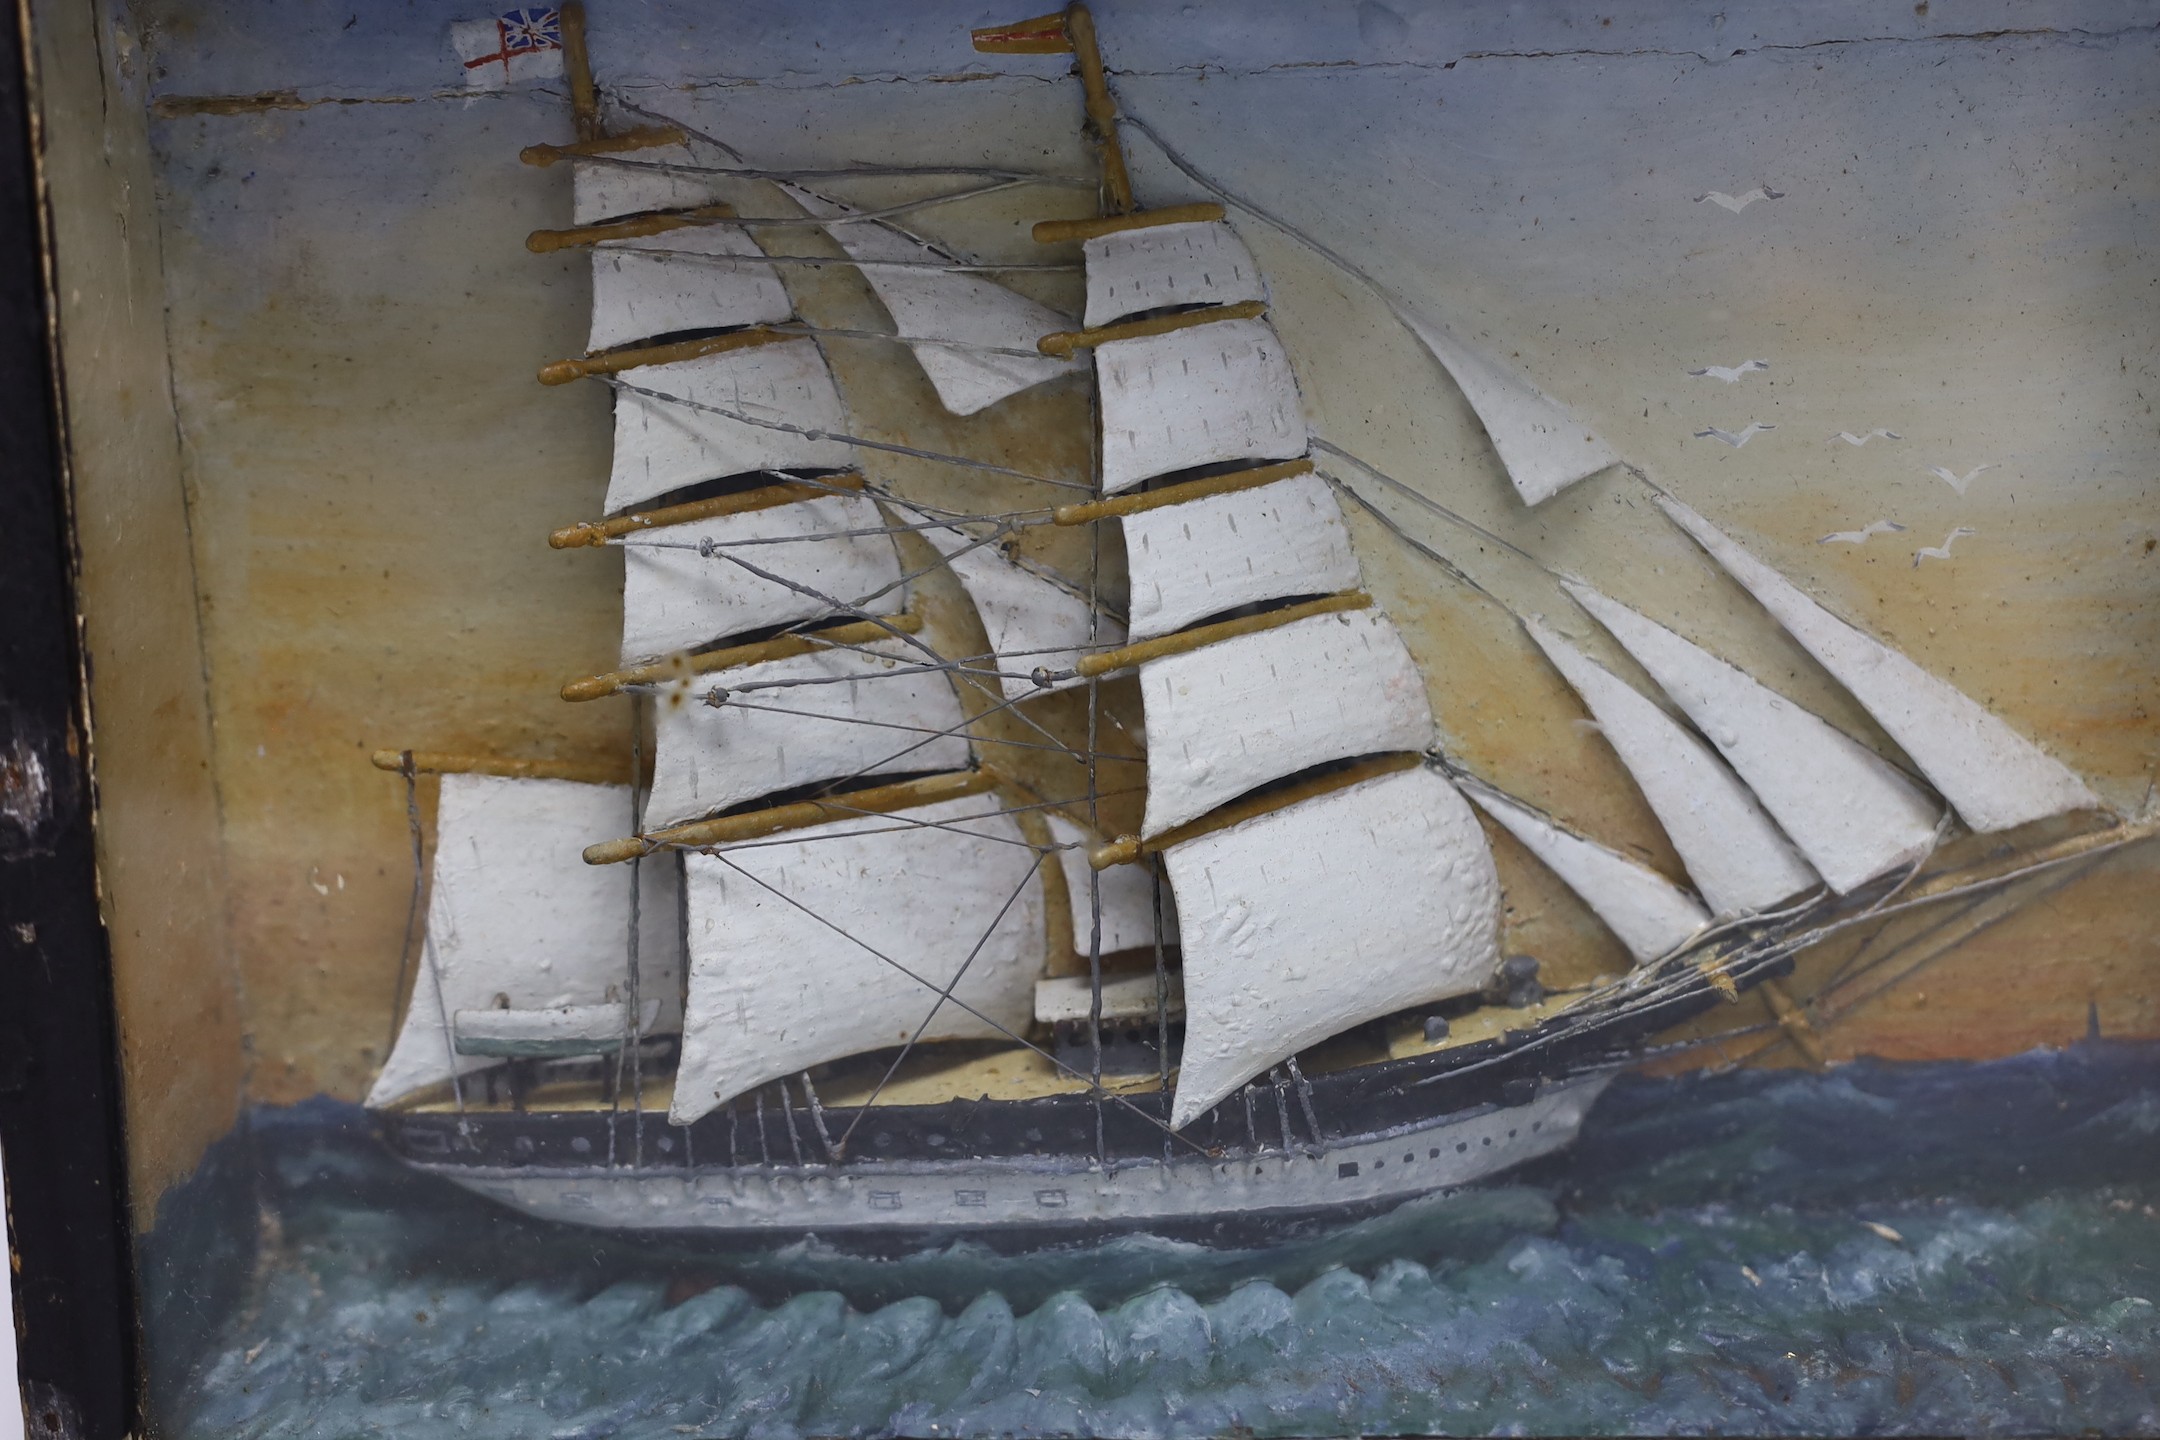 A painted half ship diorama, in glazed frame, 22x29cm